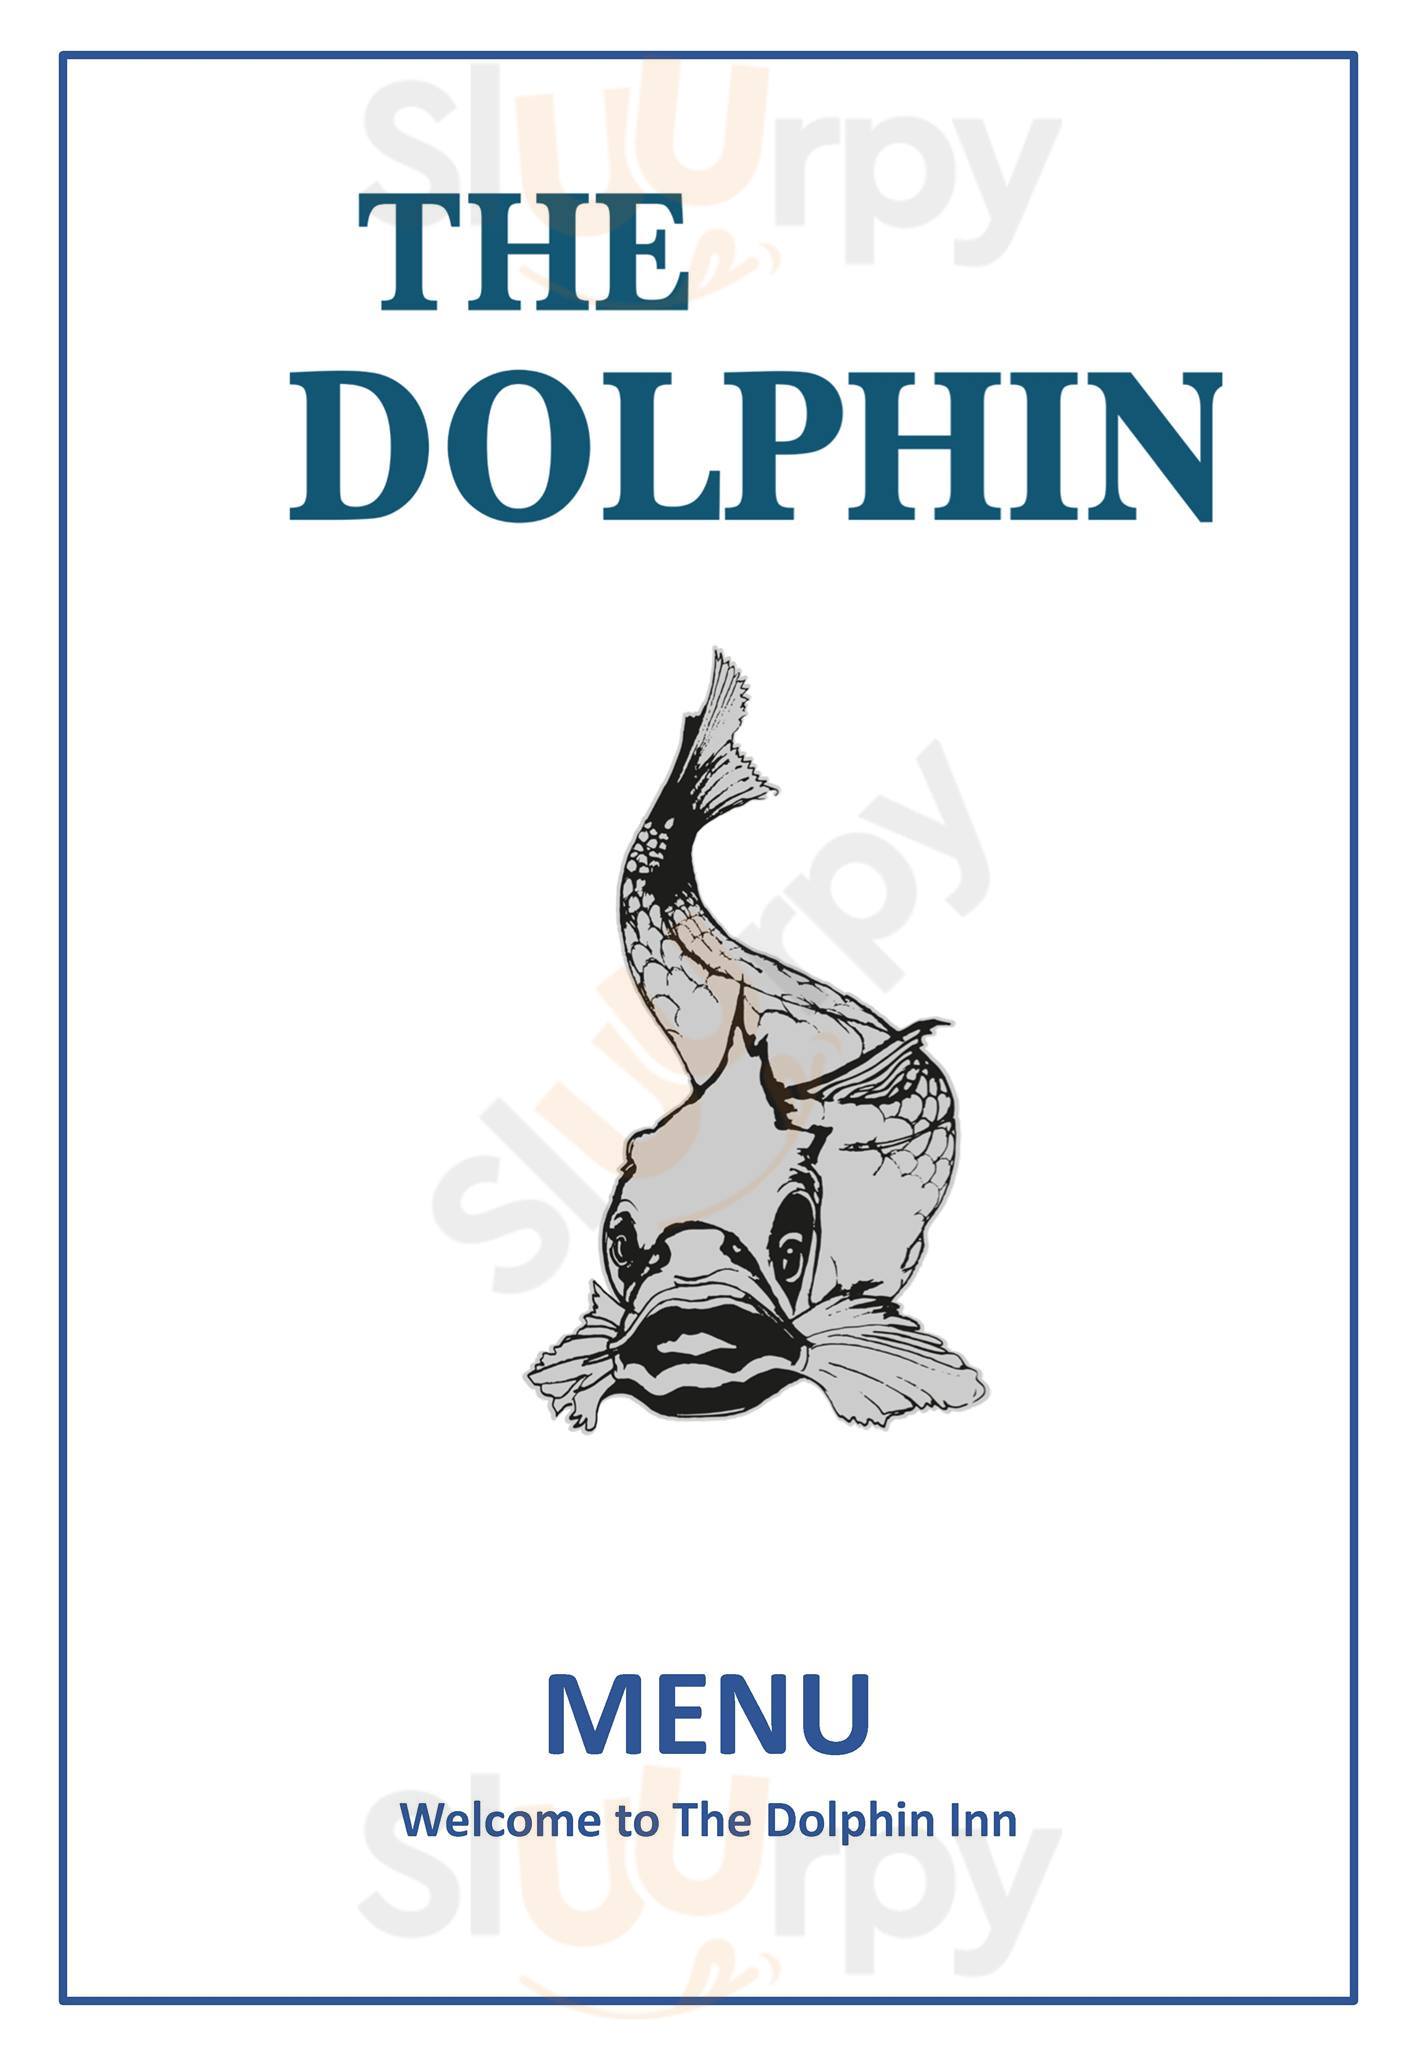 The Dolphin Inn Torquay Menu - 1